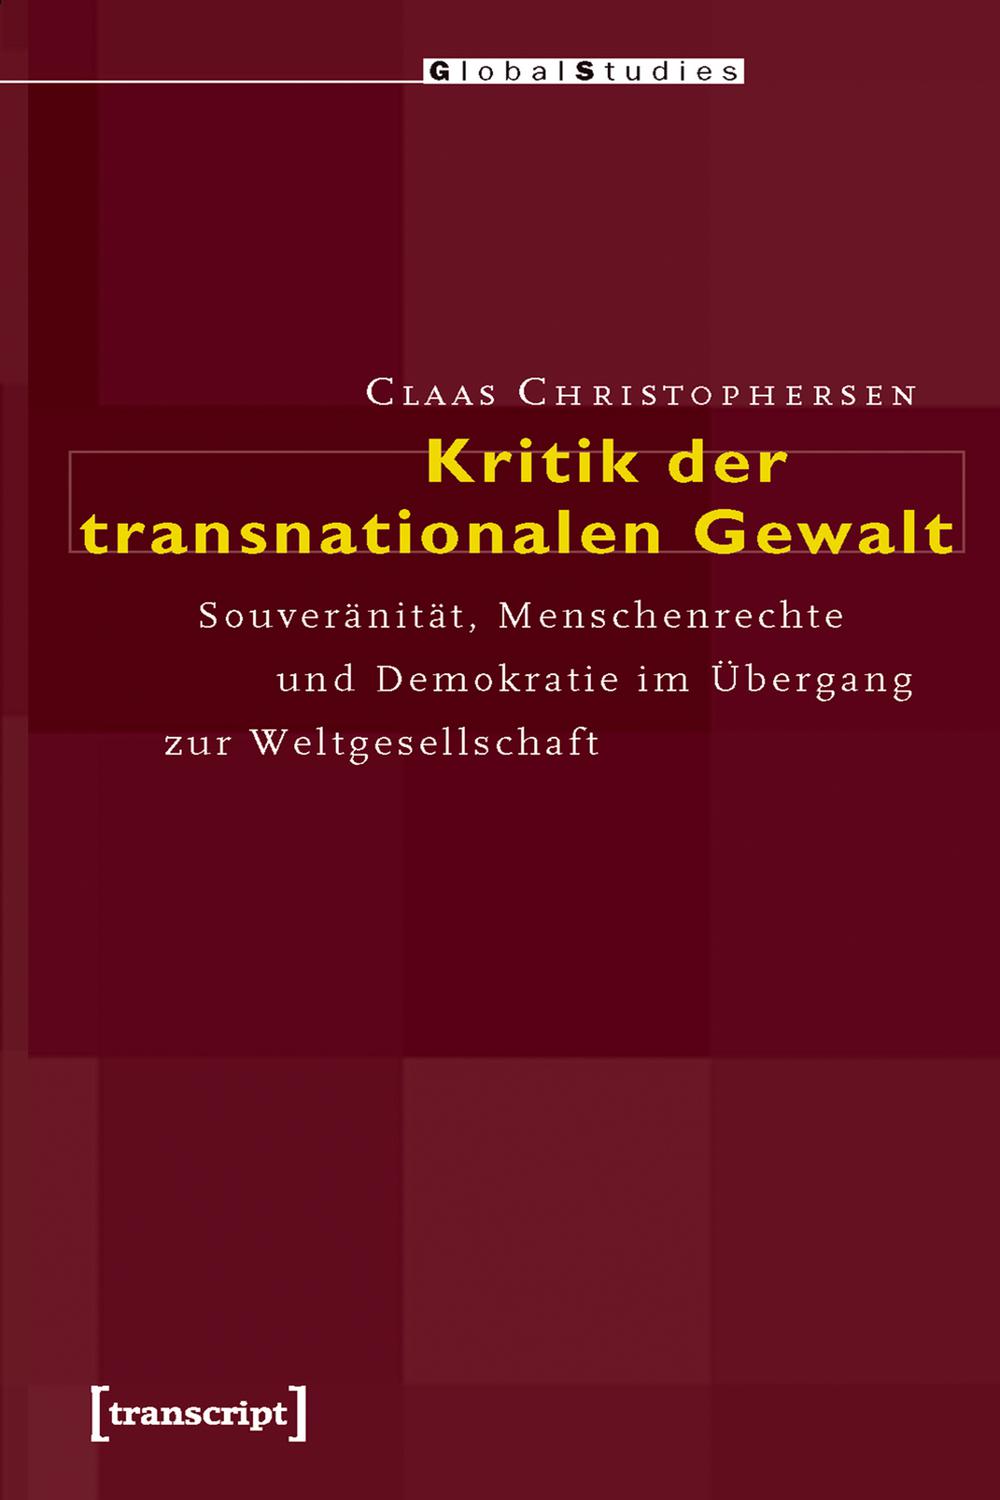 Kritik der transnationalen Gewalt - Claas Christophersen